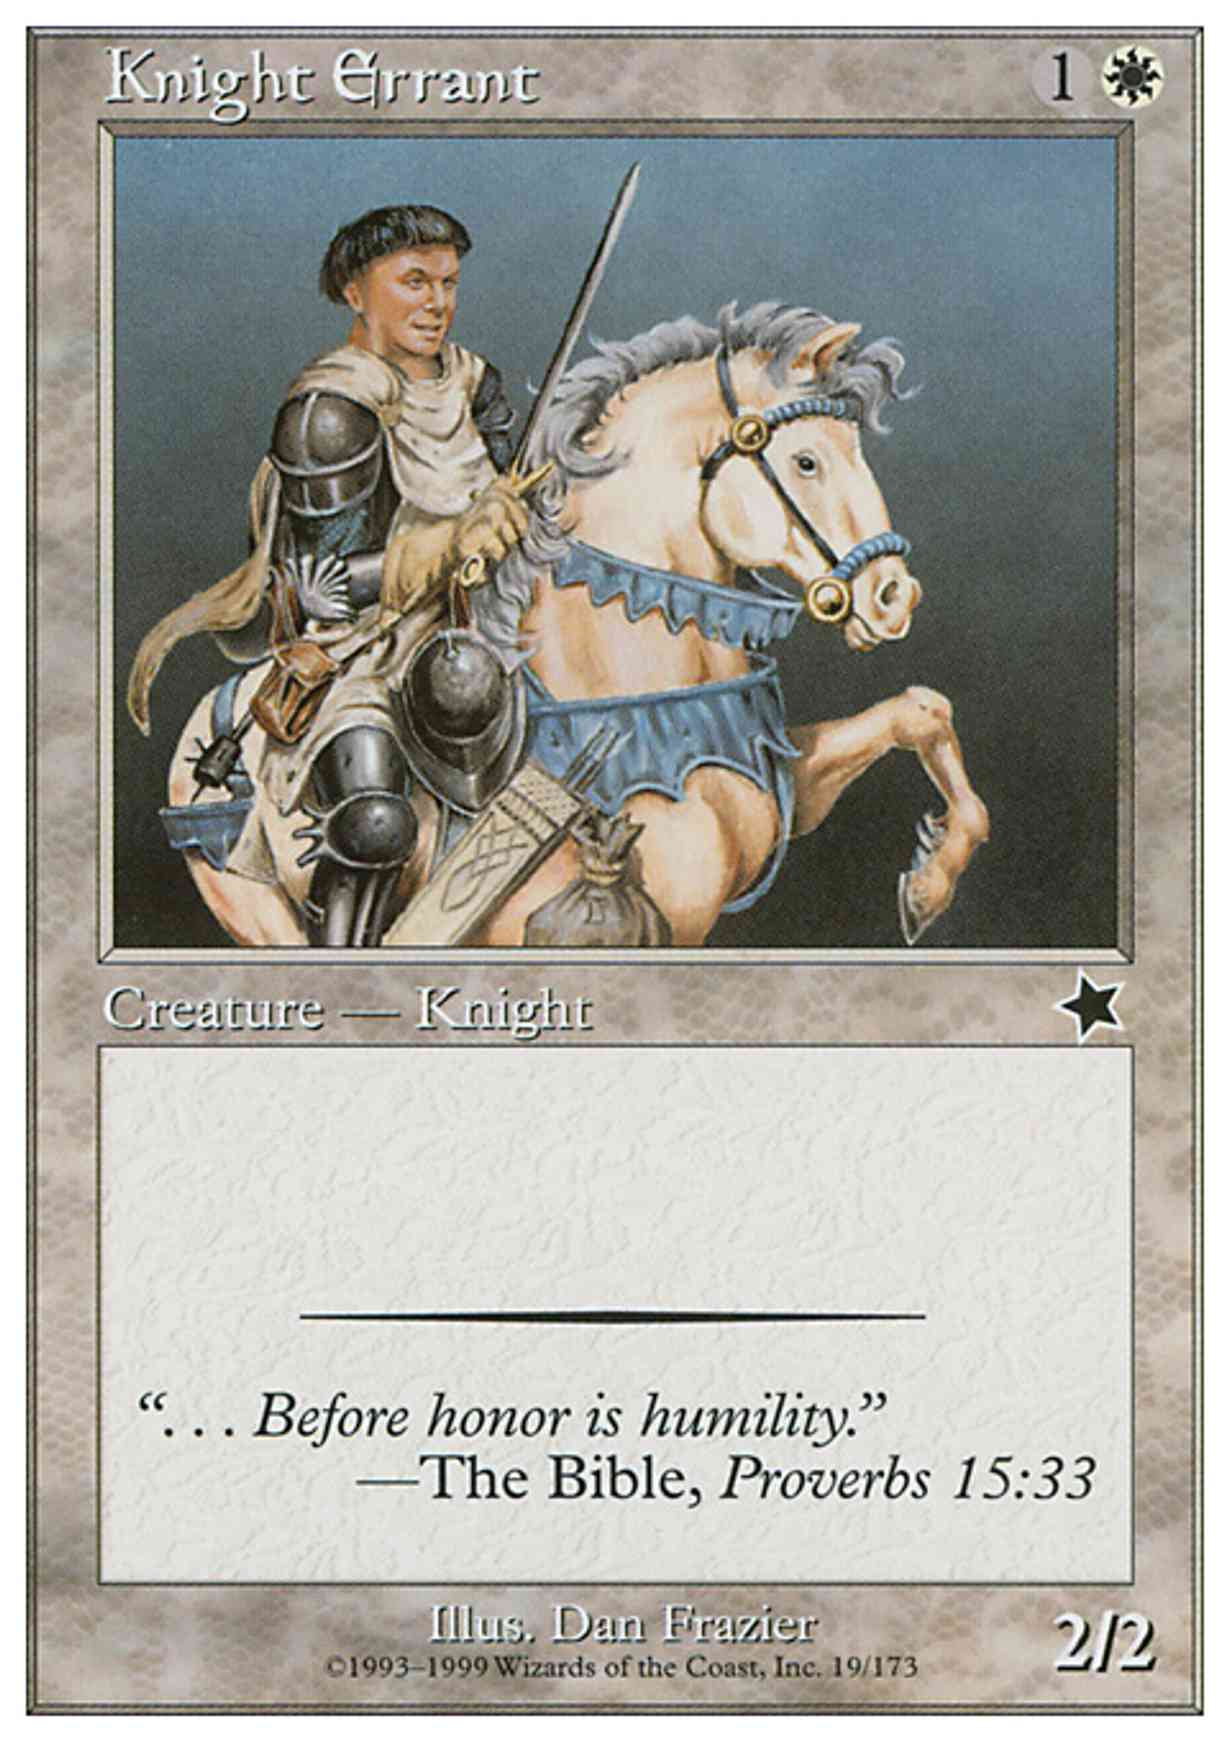 Knight Errant magic card front